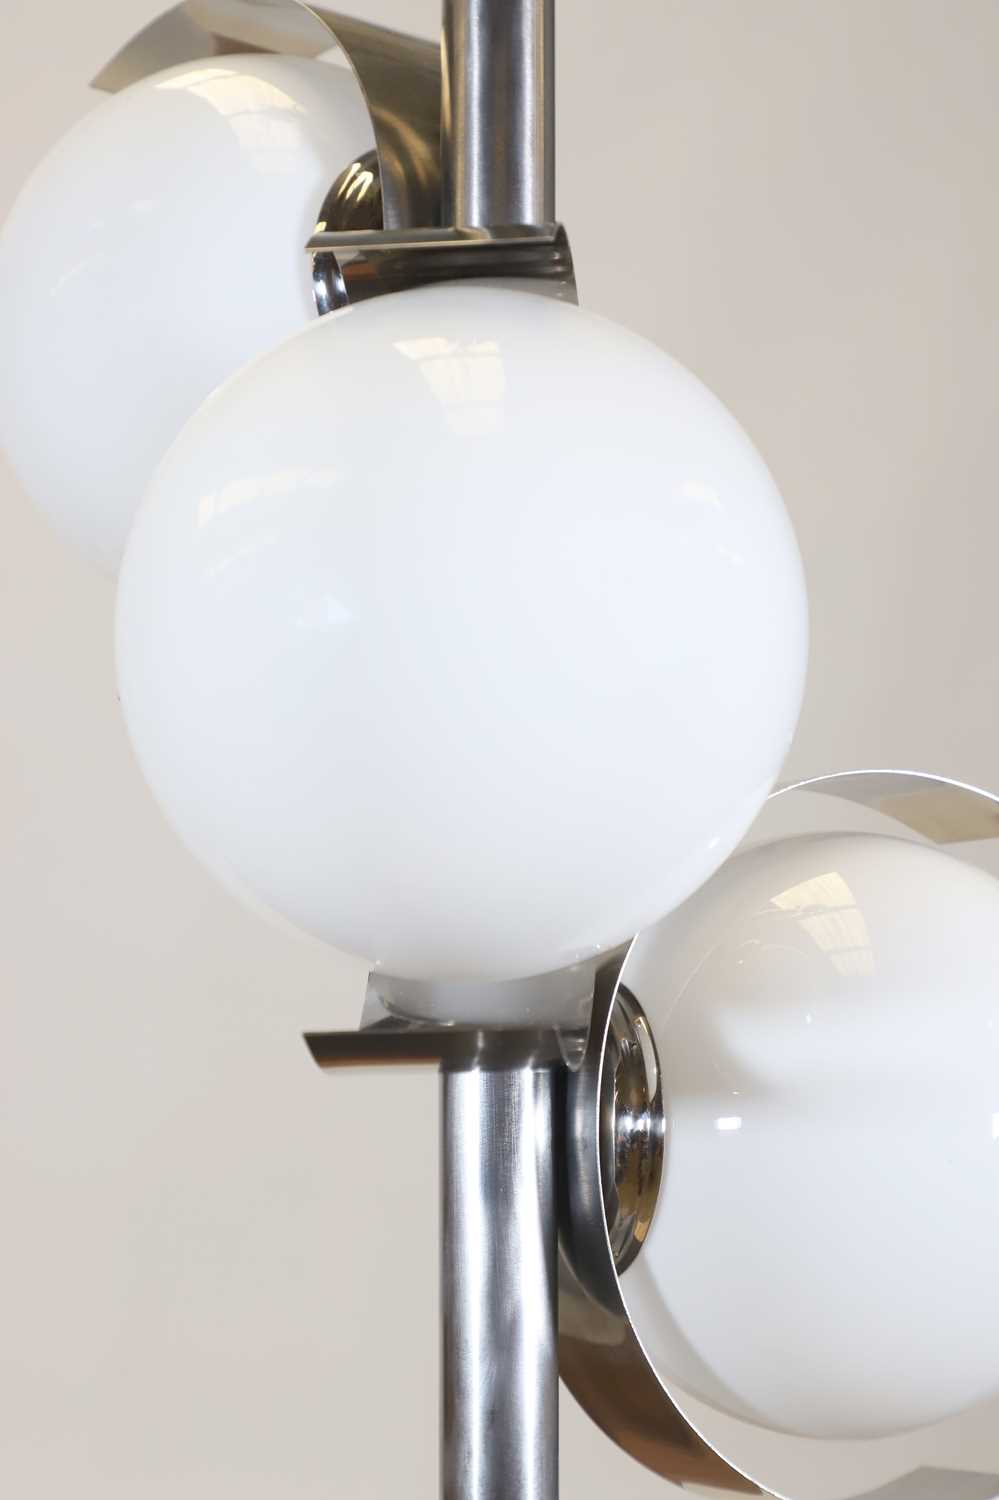 An Italian modernist suspension light, - Image 2 of 2